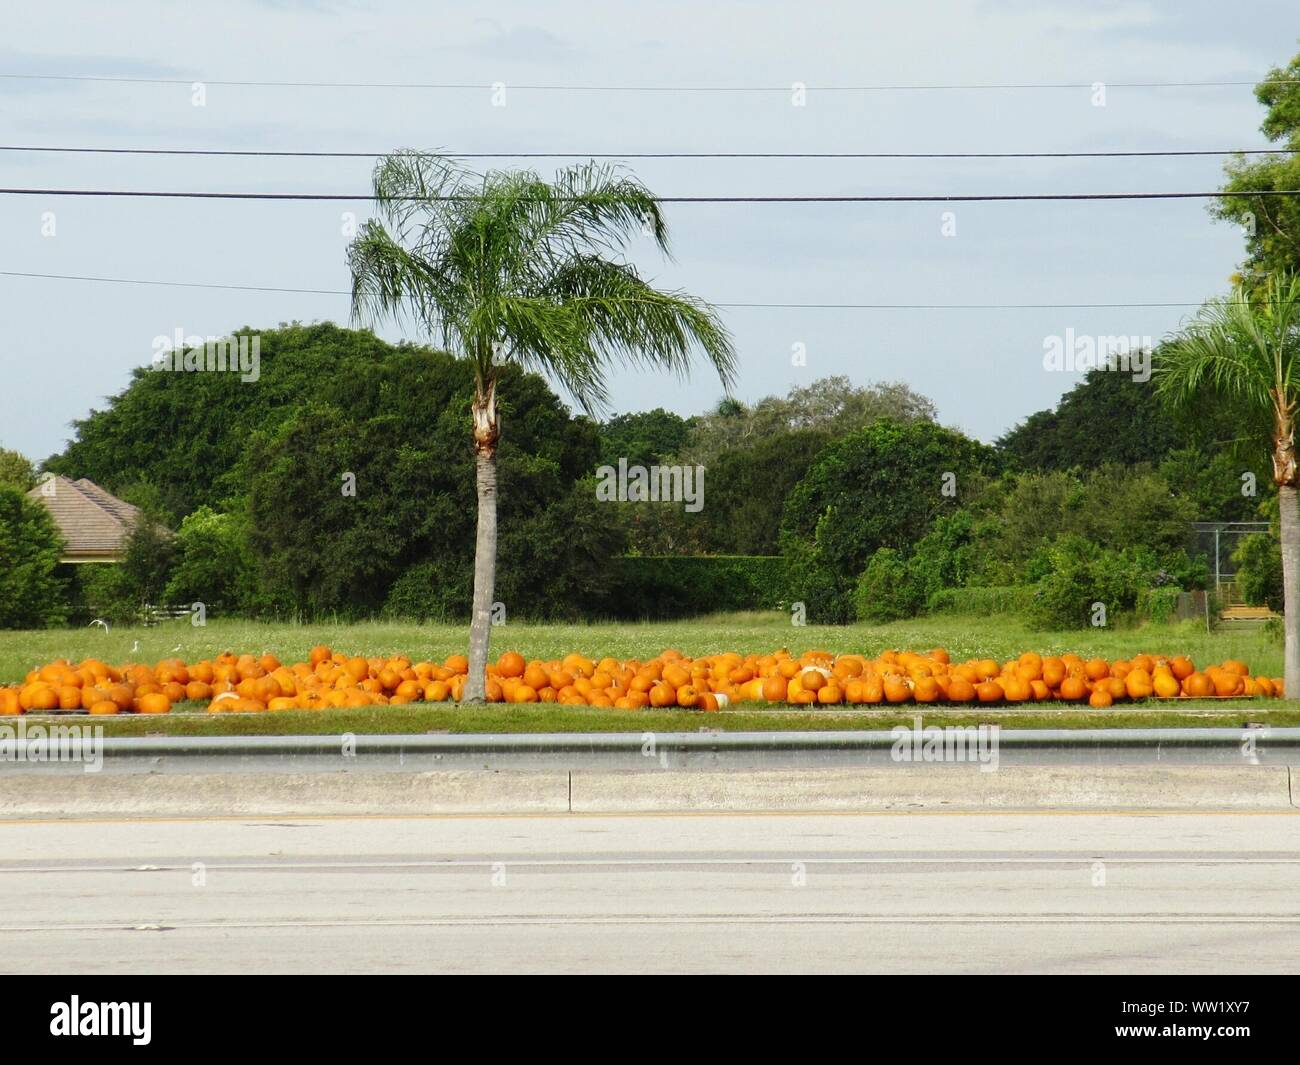 Pumpkins At Roadside Against Trees Stock Photo